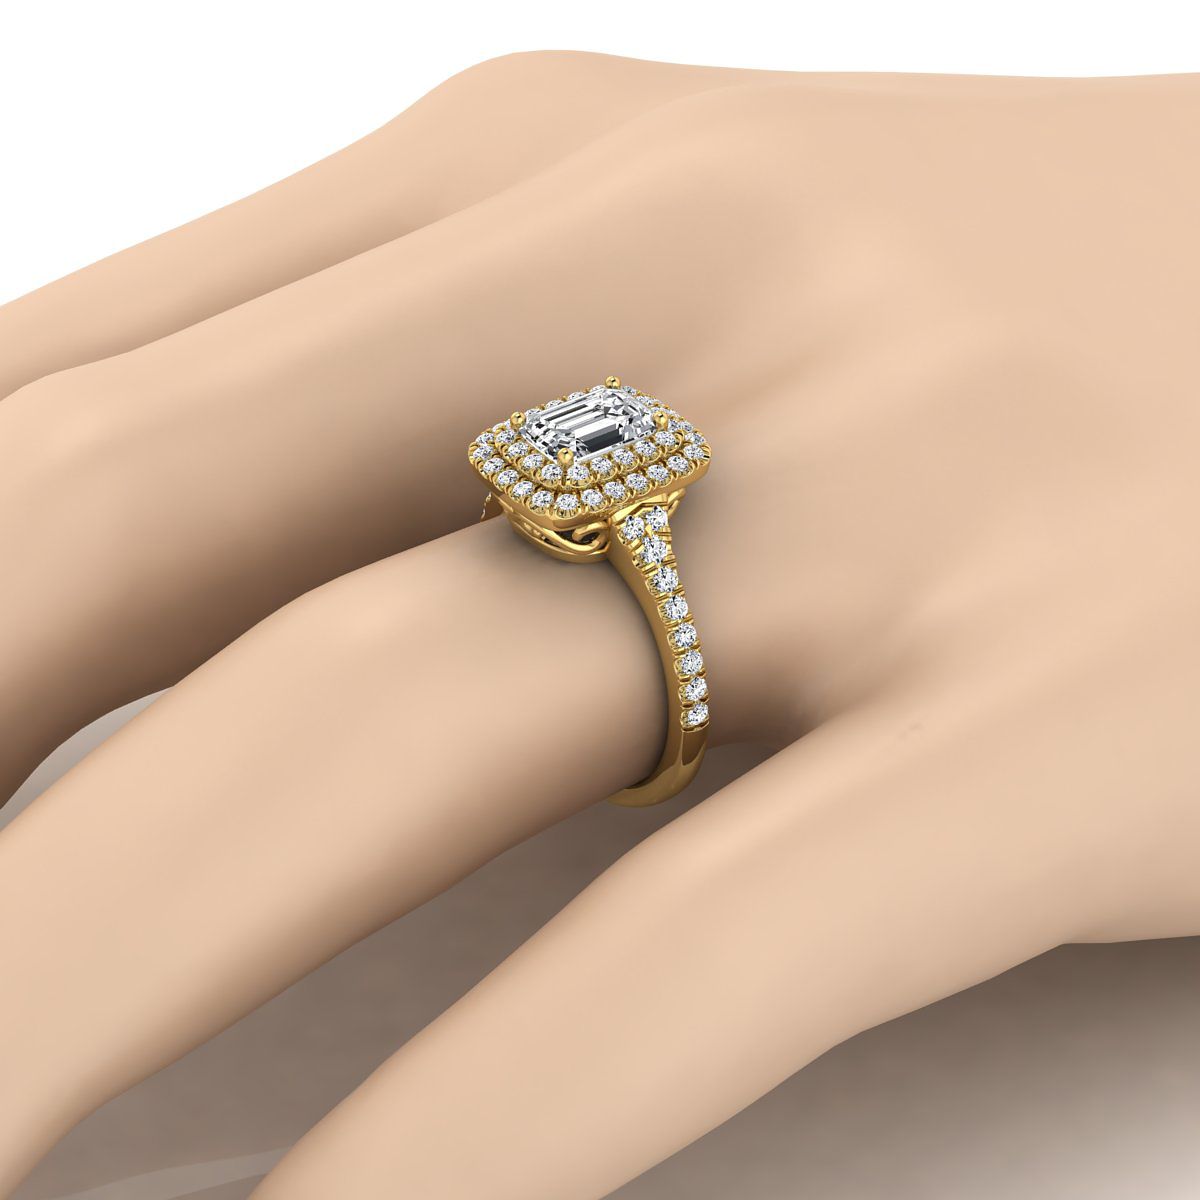 14K Yellow Gold Emerald Cut Diamond Double Halo Scalloped Pavé Engagement Ring -1/2ctw